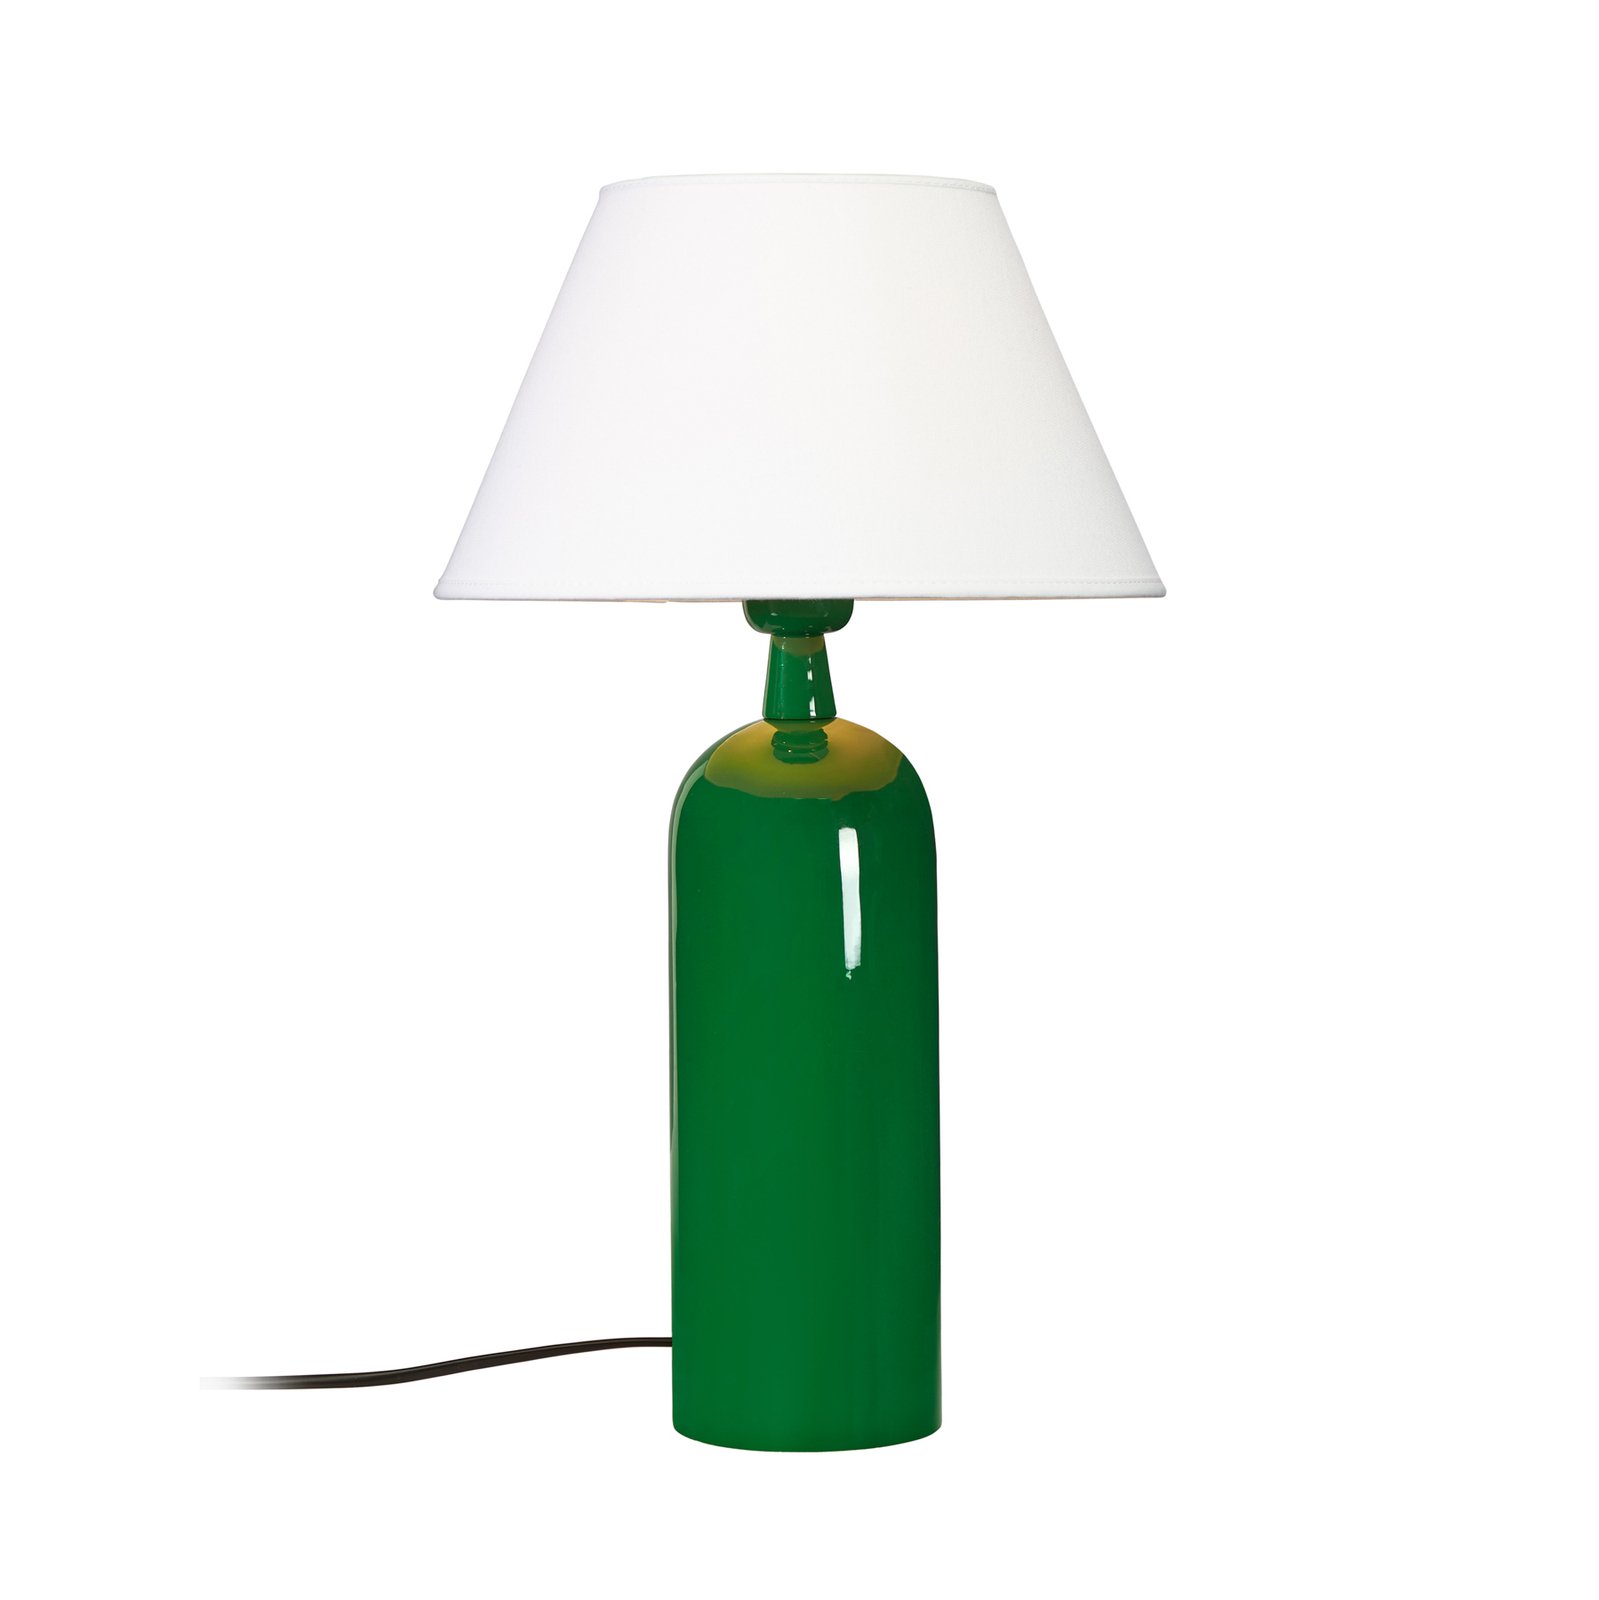 PR Home Carter lampe à poser verte/blanche